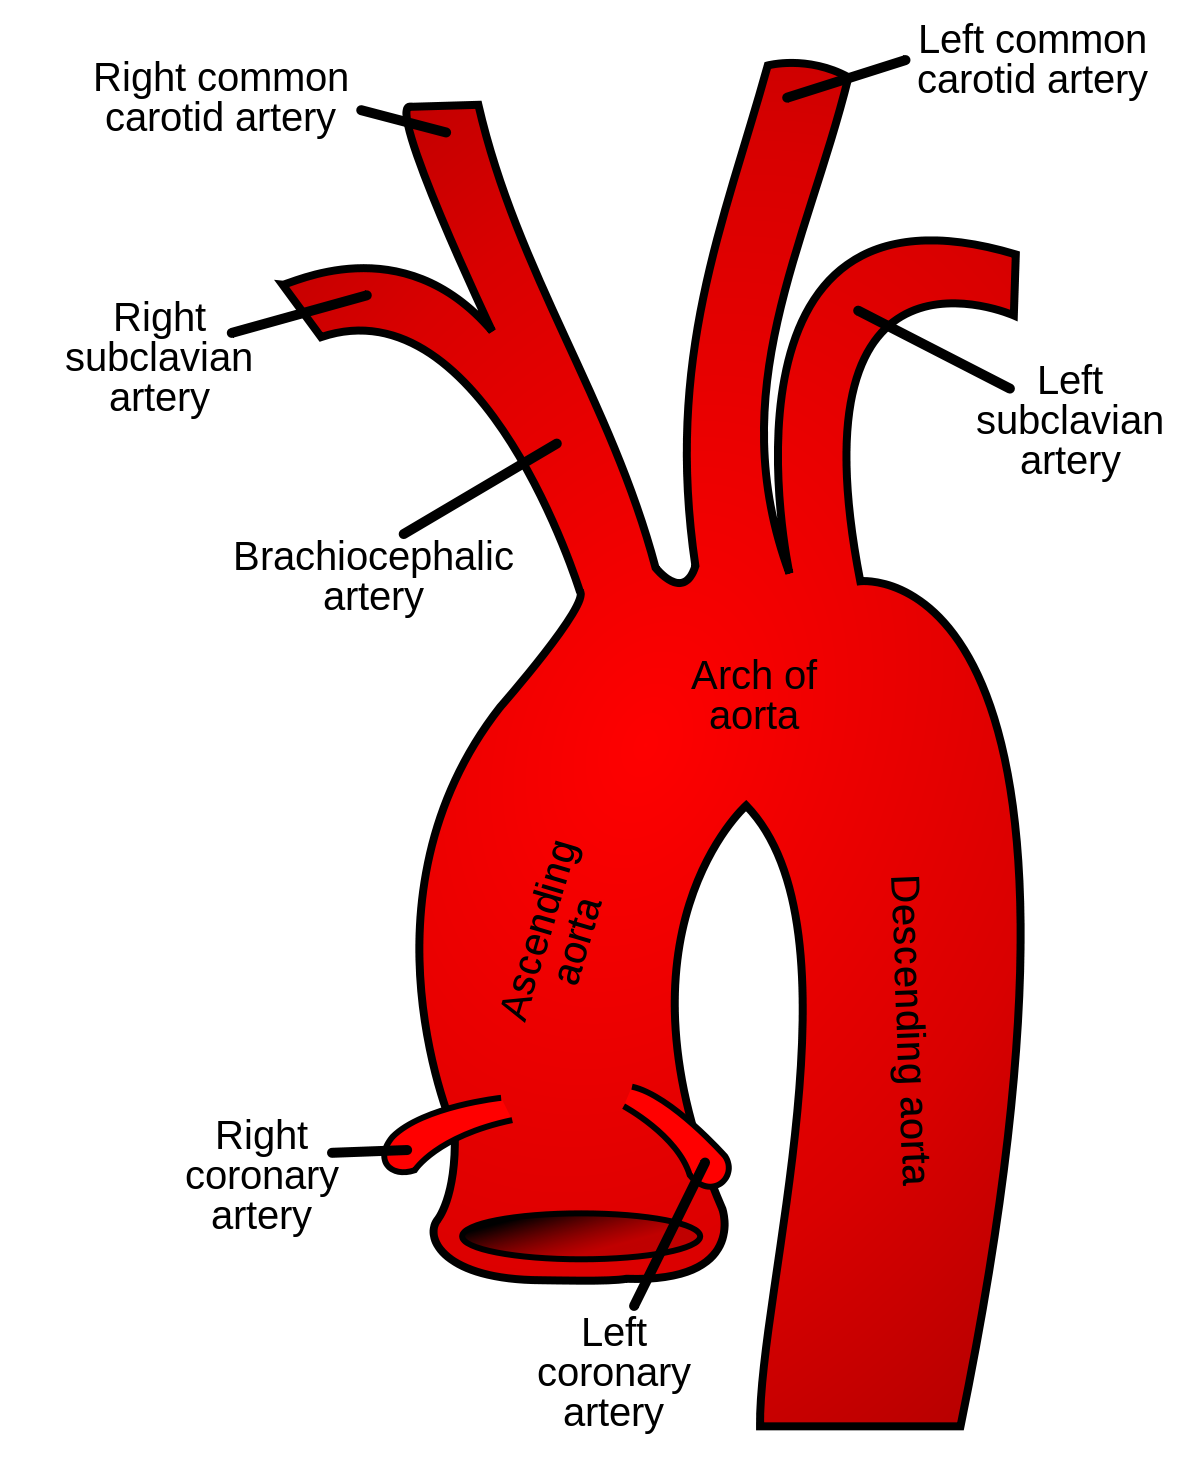 Ascending aorta - Wikipedia